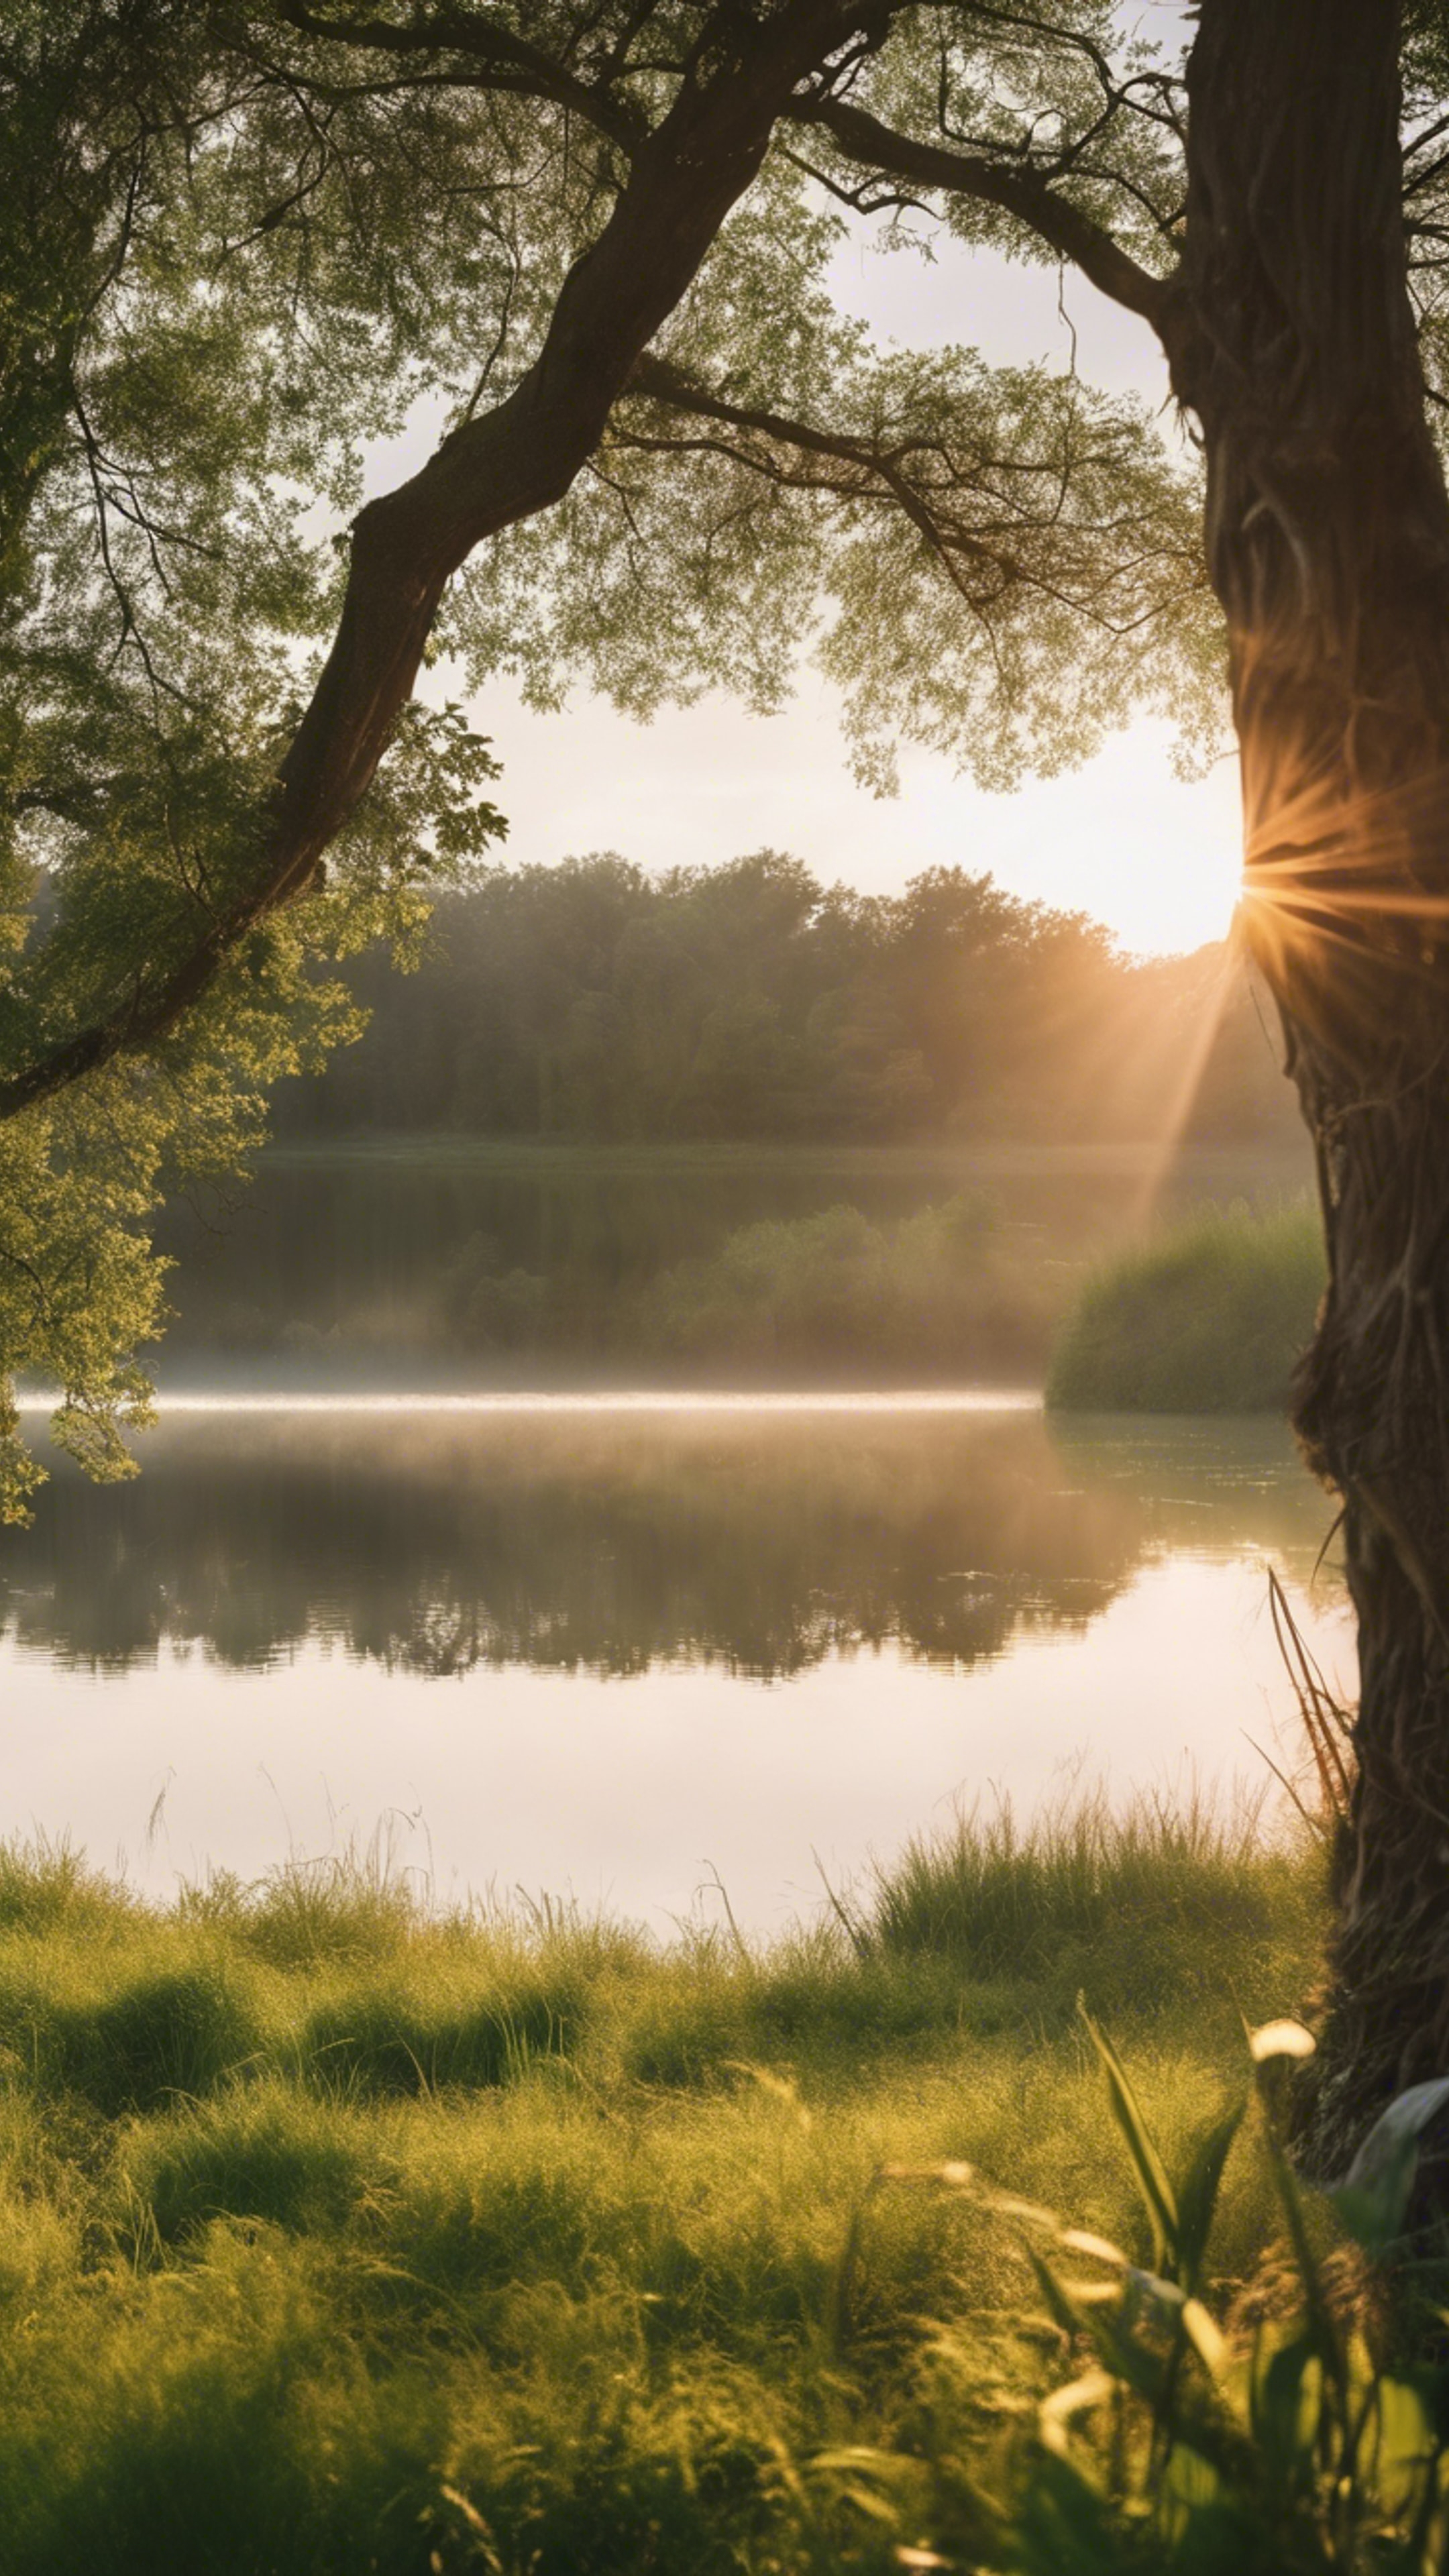 A beautiful sunrise reflecting off a serene lake, enveloped by lush green meadows. Tapeta na zeď[3fcd1b5f237347a583b1]